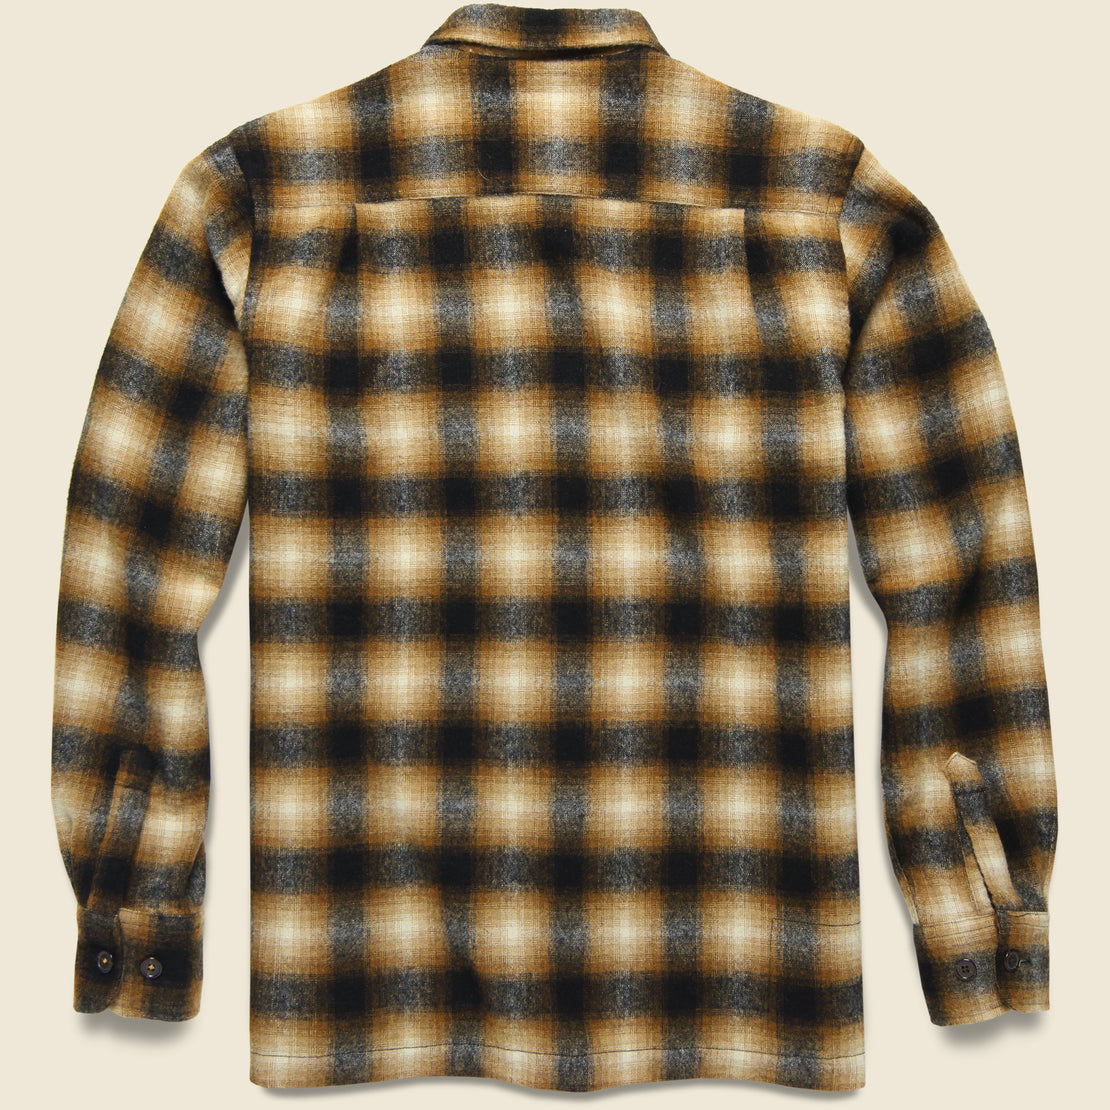 Texas Wool Plaid Utility Shirt - Brown Check - Universal Works - STAG Provisions - Tops - L/S Woven - Plaid